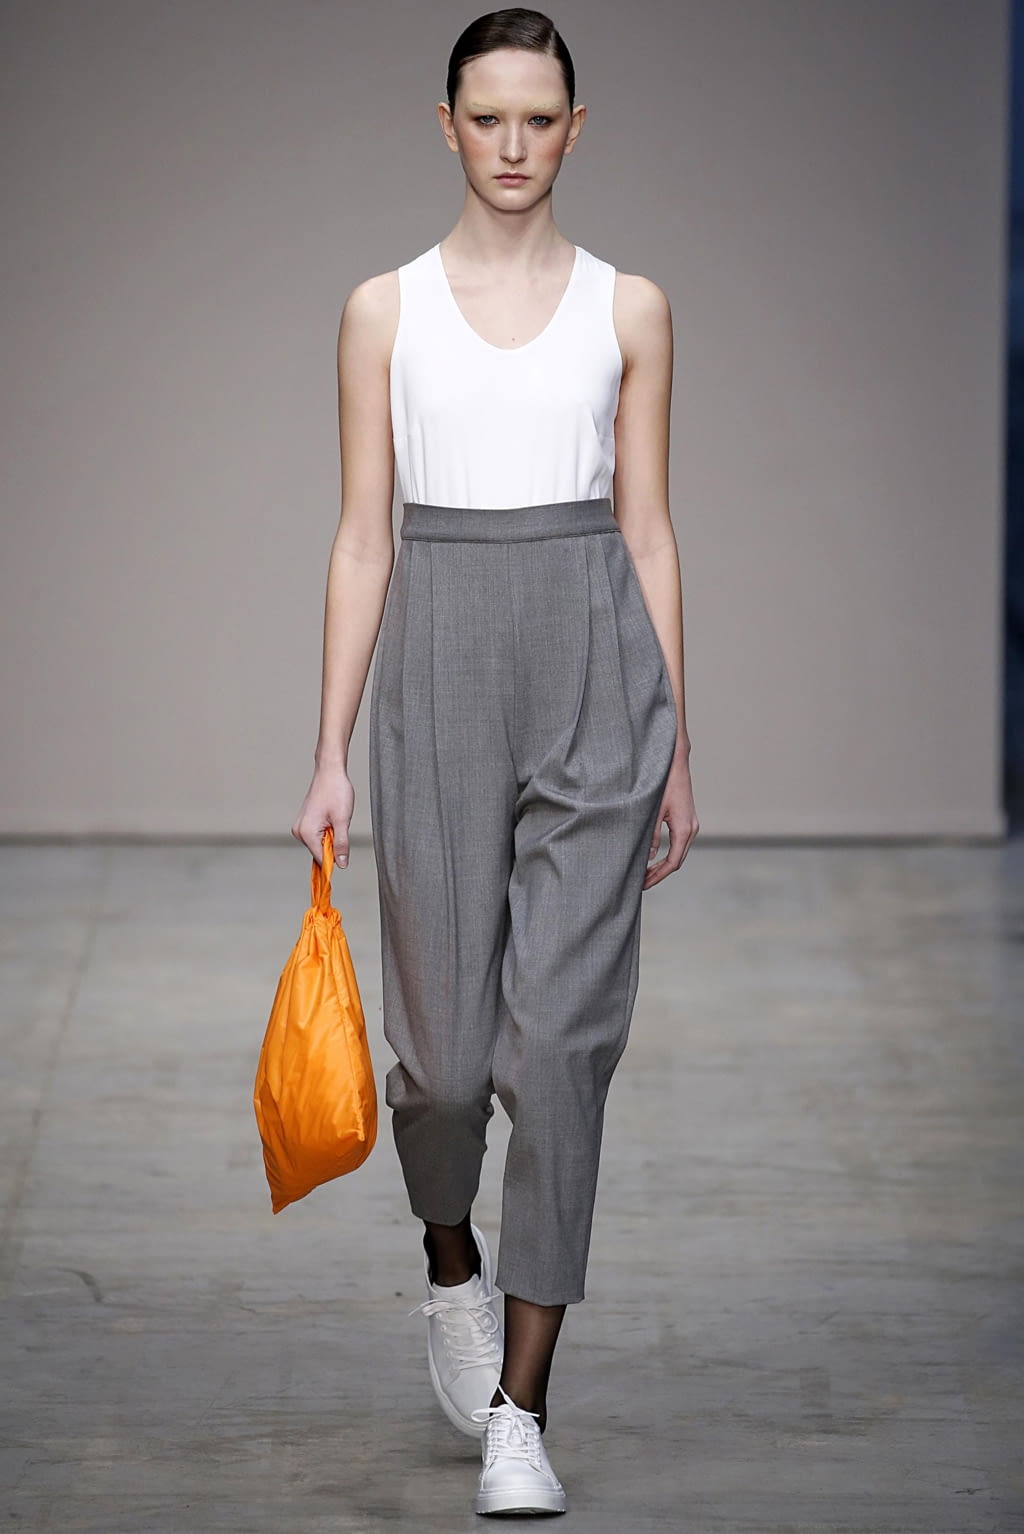 Lucio Vanotti F/W 18 womenswear #19 - Tagwalk: The Fashion Search